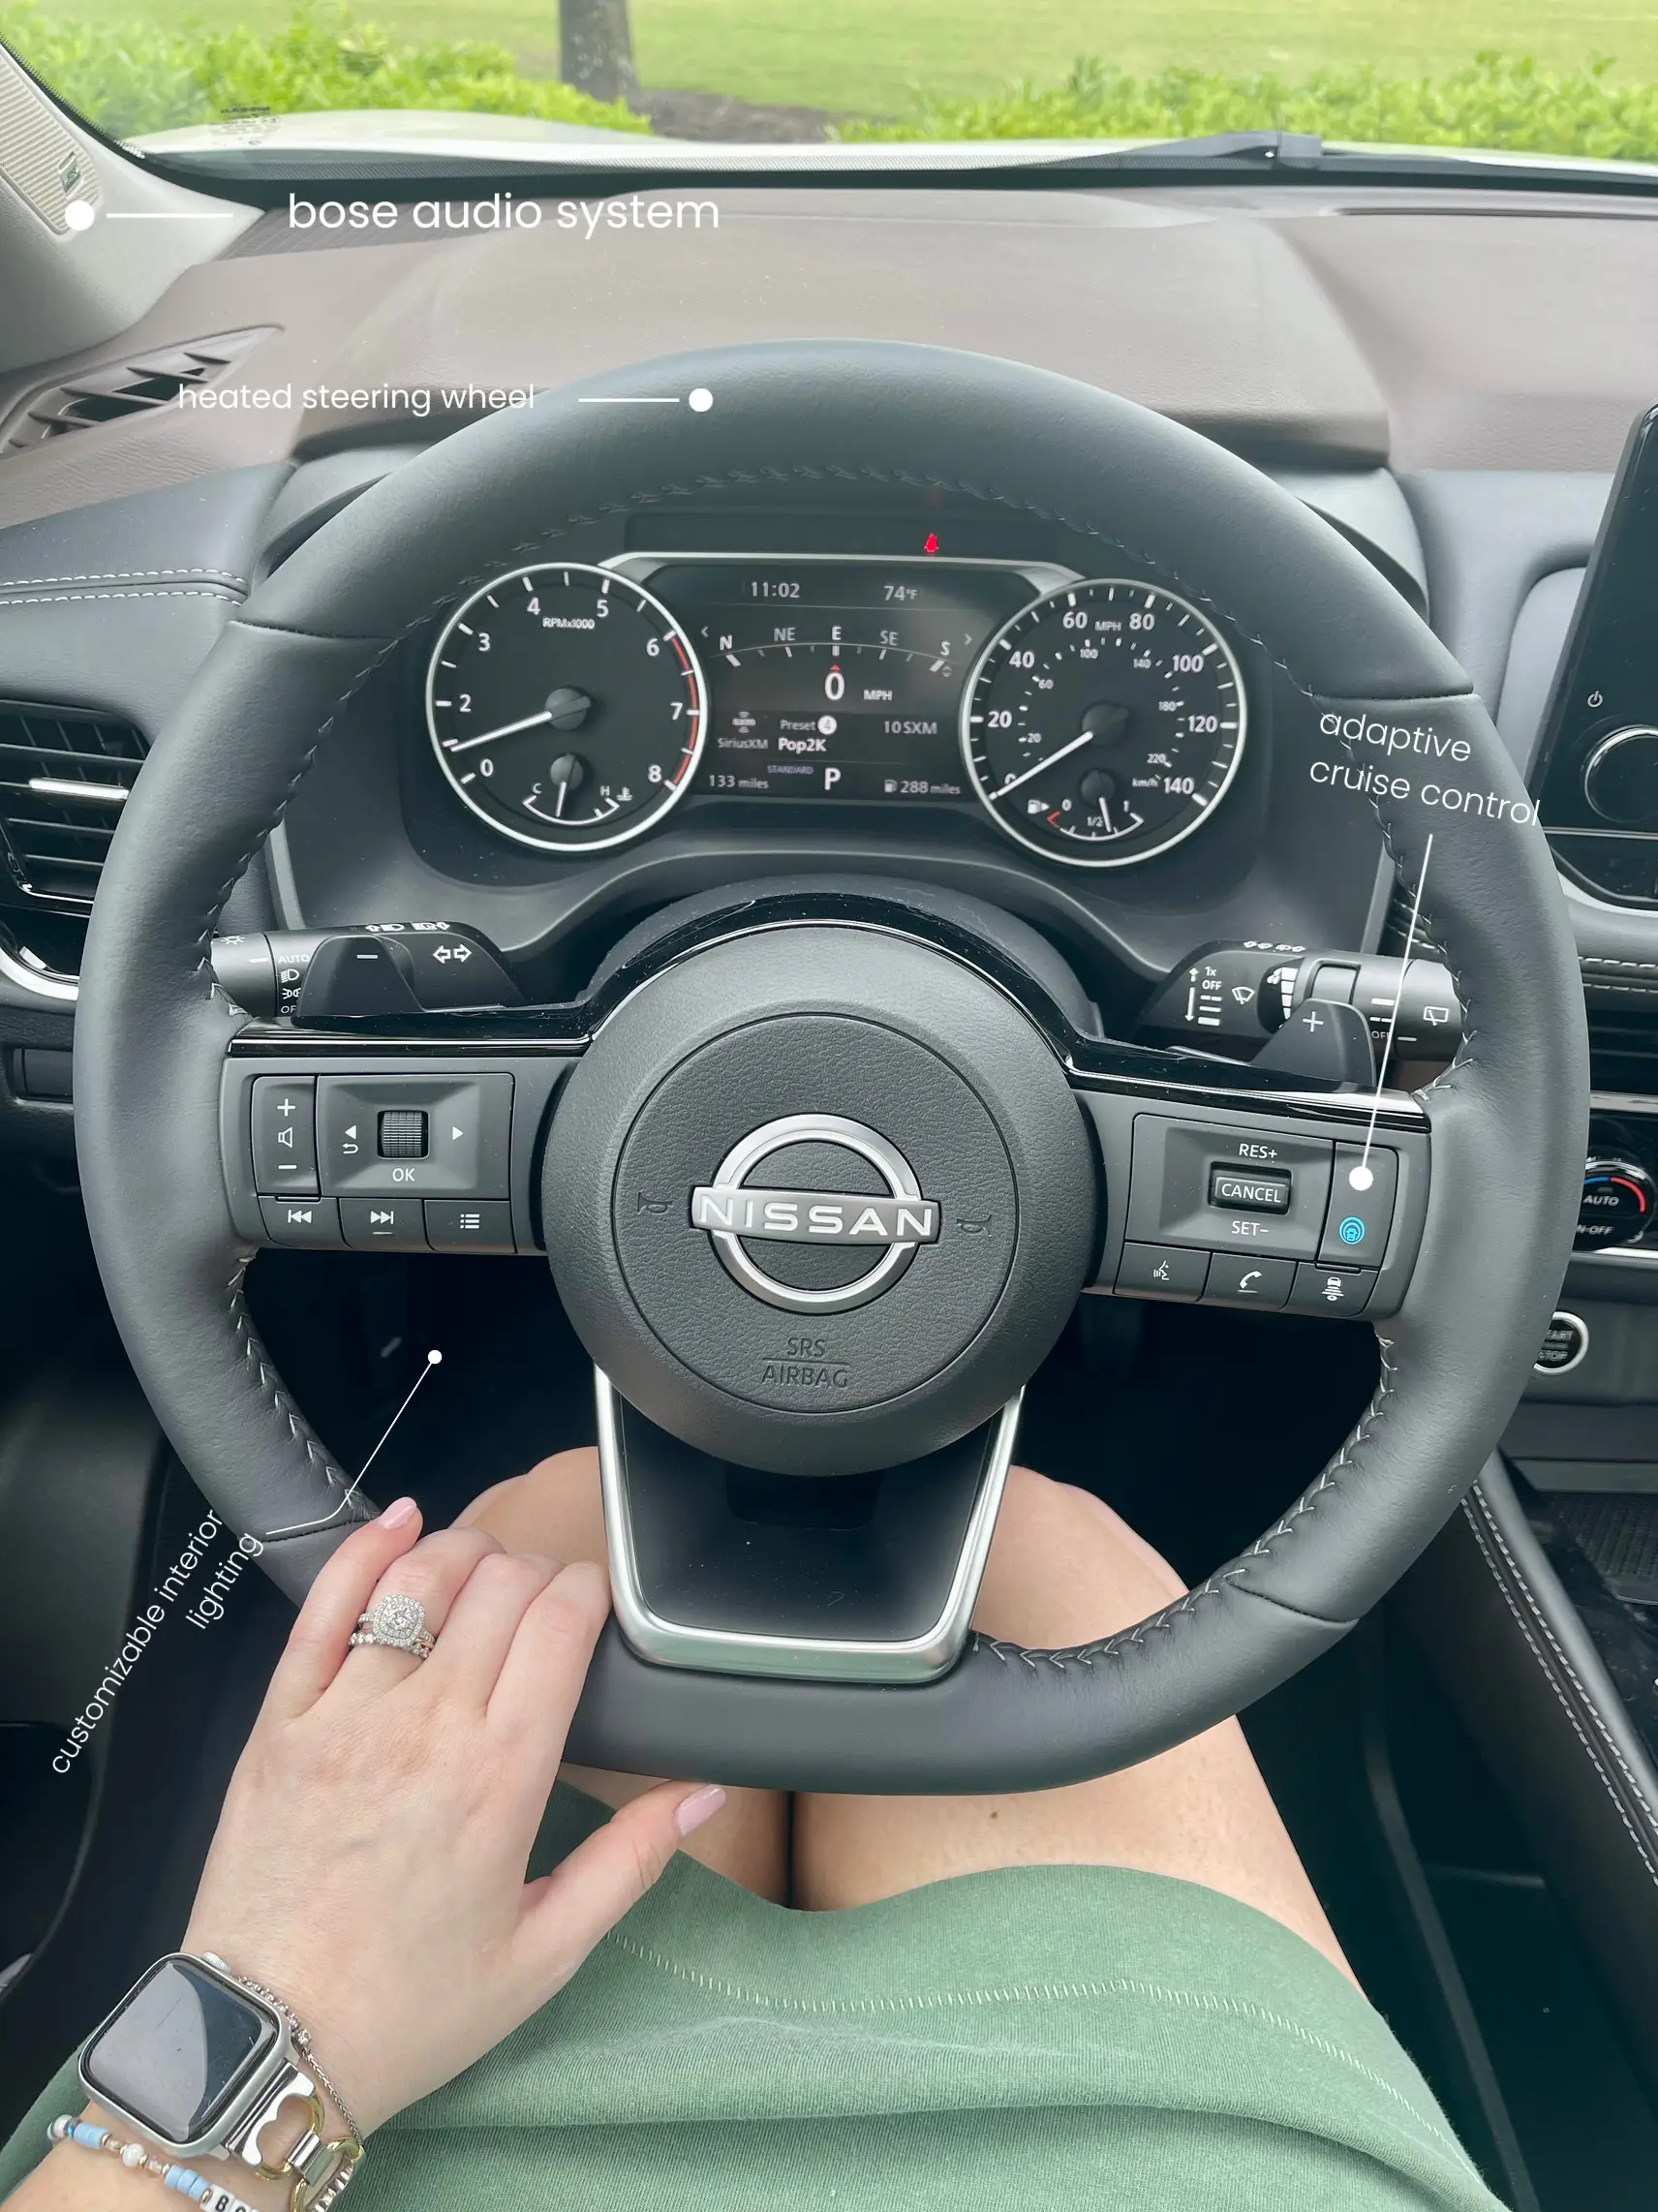 Nissan Kicks leather-wrapped steering wheel - Lemon8 Search